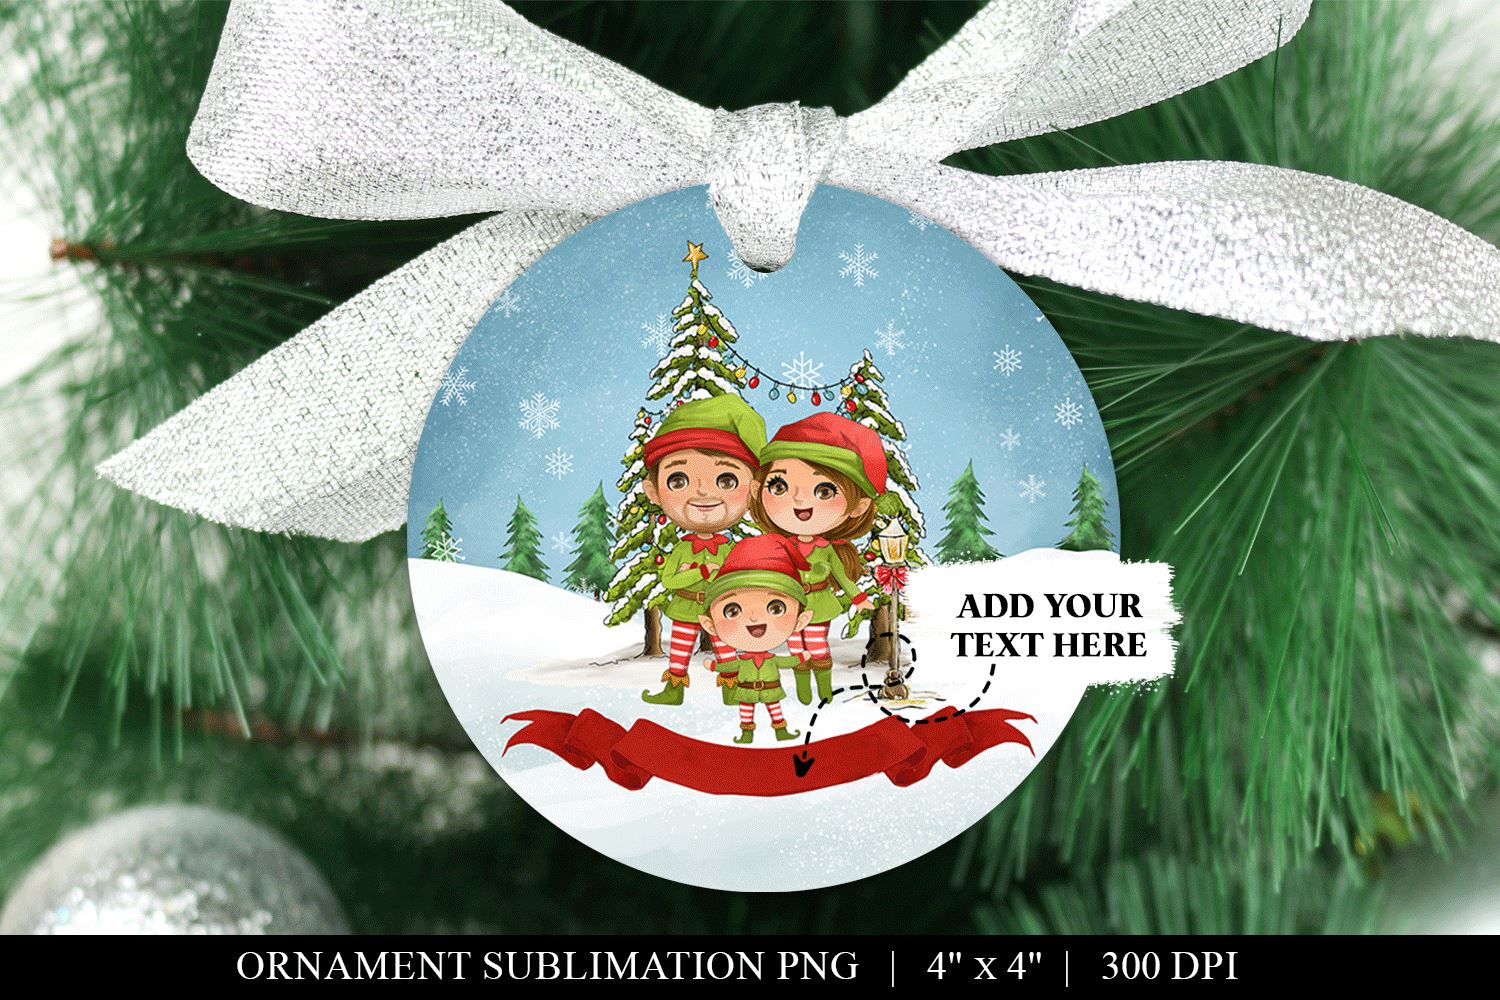 Buffalo Plaid Ornament Design, Ornament Sublimation Images, Ornament  Templates, Merry Christmas Designs, Christmas Sublimation, Ornaments - So  Fontsy